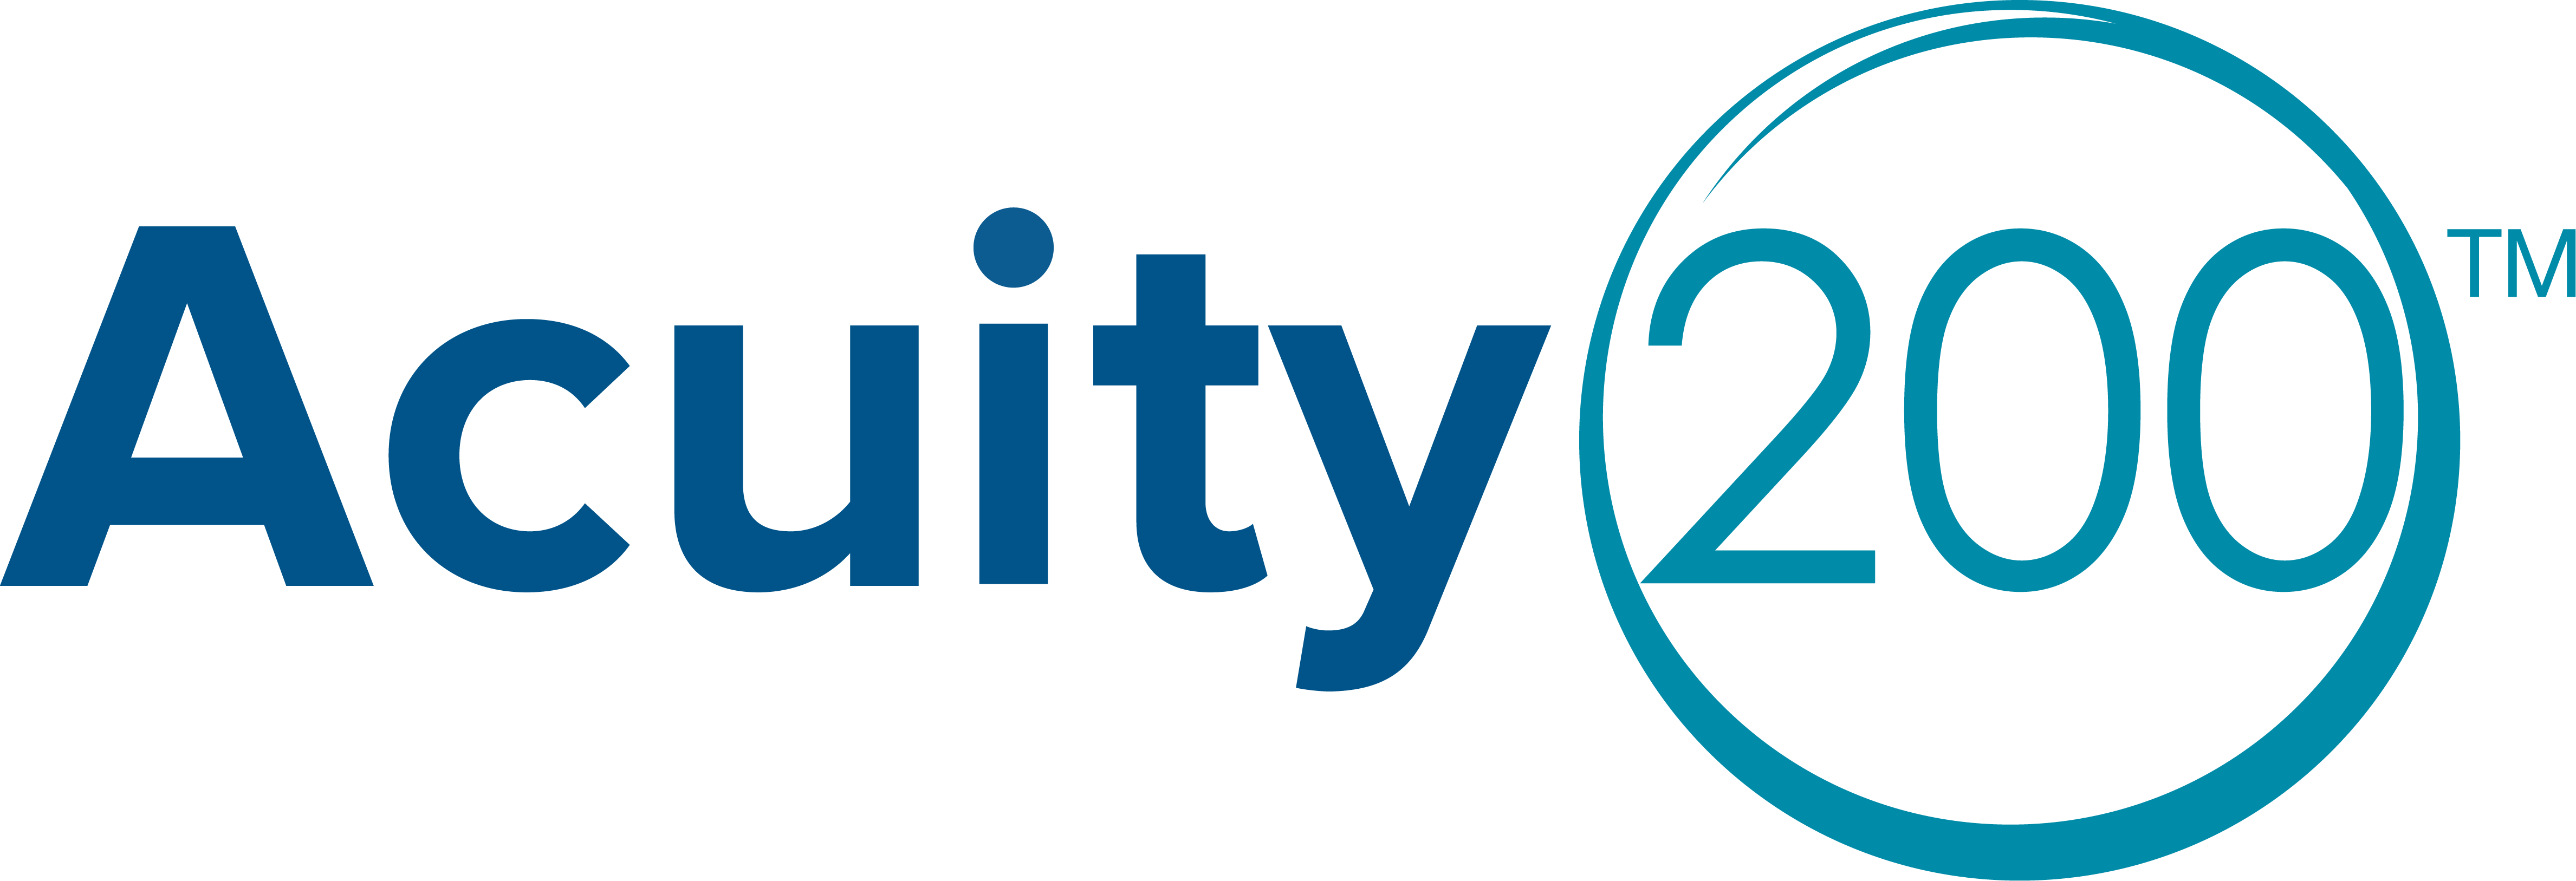 acuity200 logo